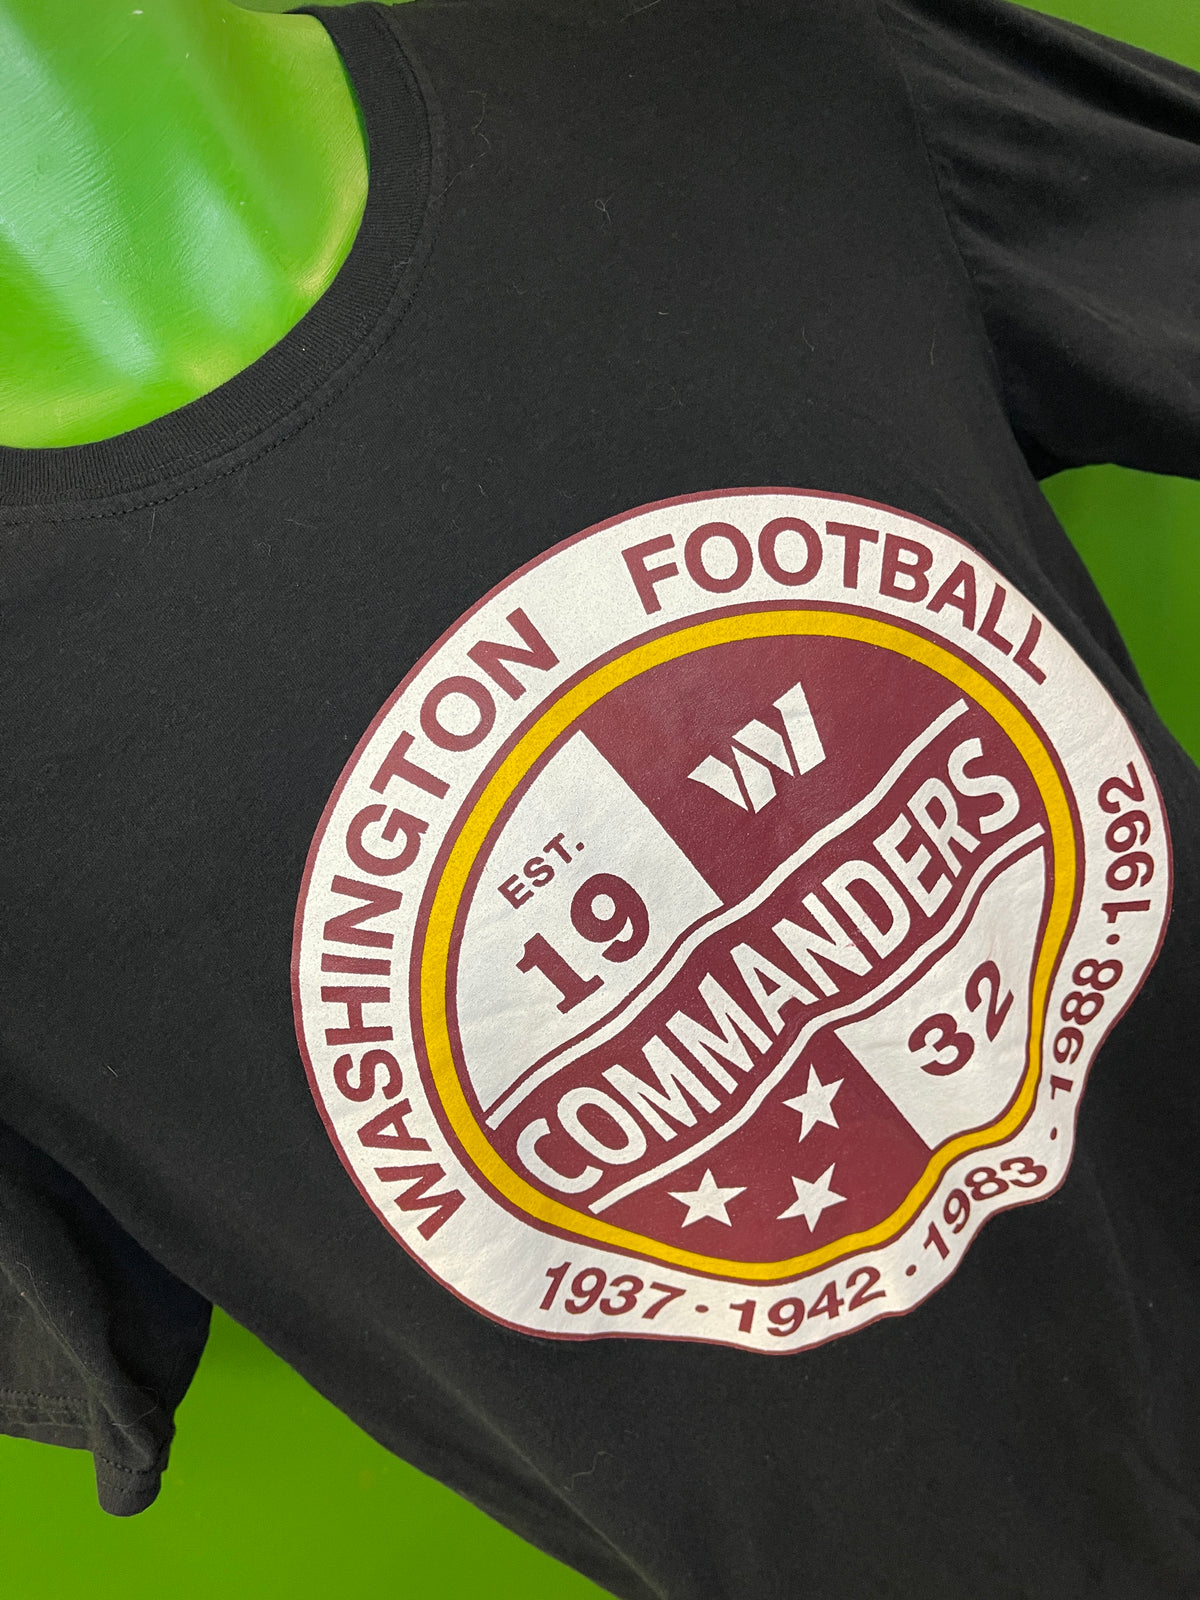 NFL Washington Commanders 100% Cotton T-Shirt Men's Medium